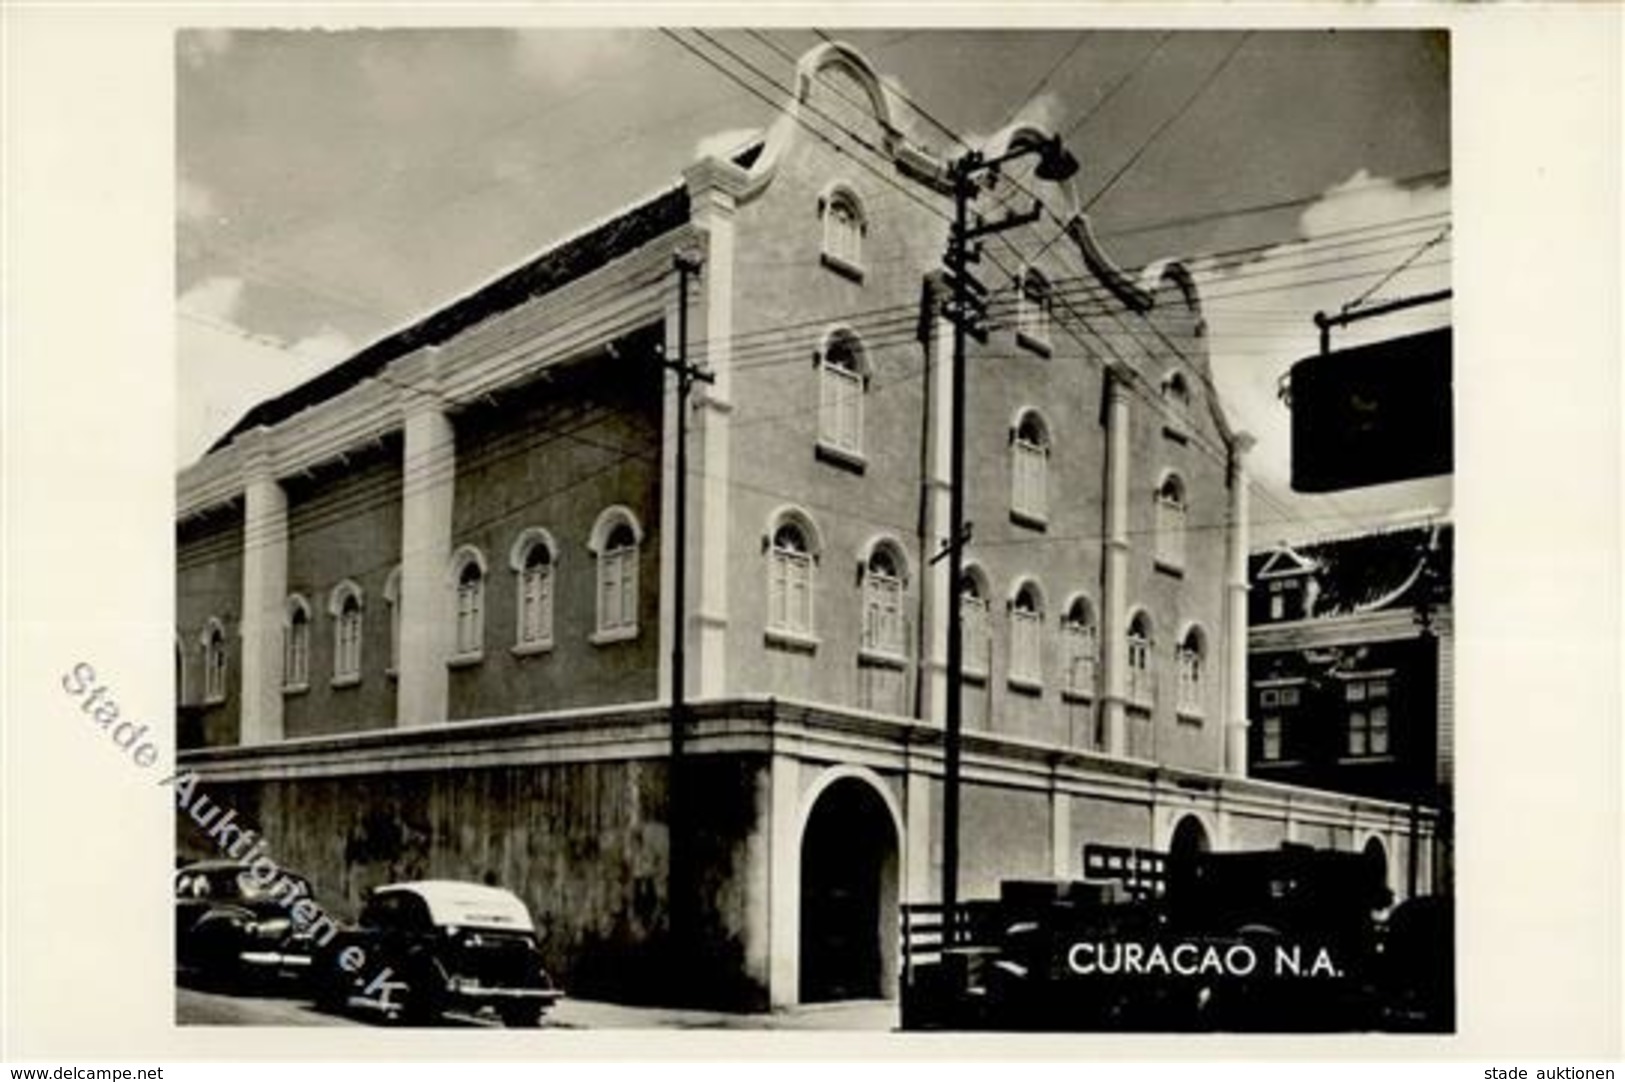 Synagoge CURACAO N.A. - I Synagogue - Jewish